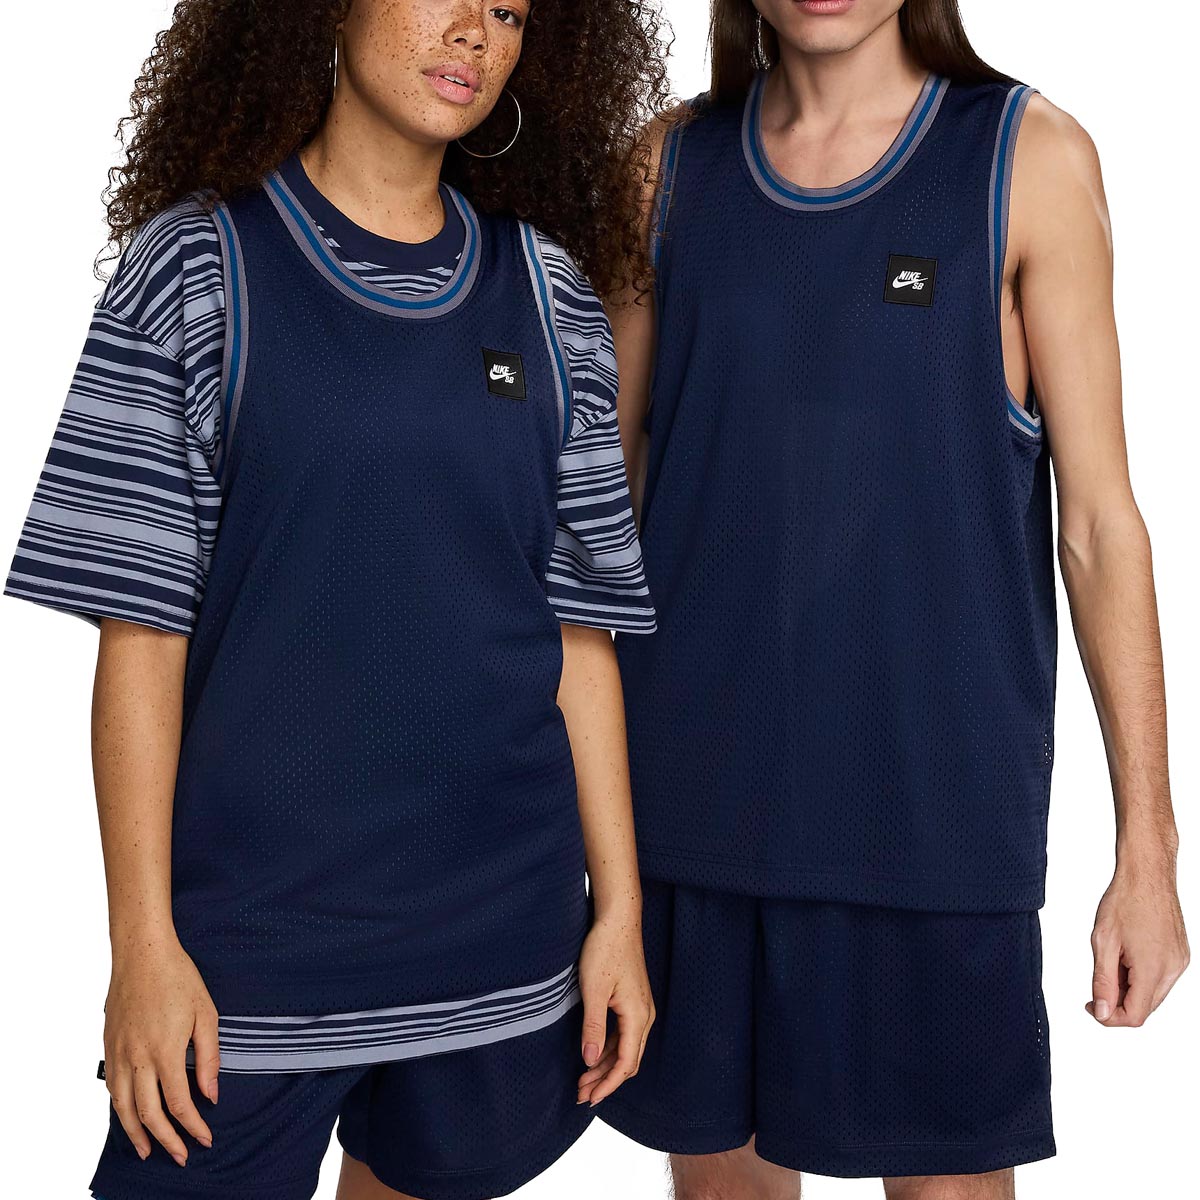 Nike SB Basketball Skate Jersey - Midnight Navy/Court Blue image 2